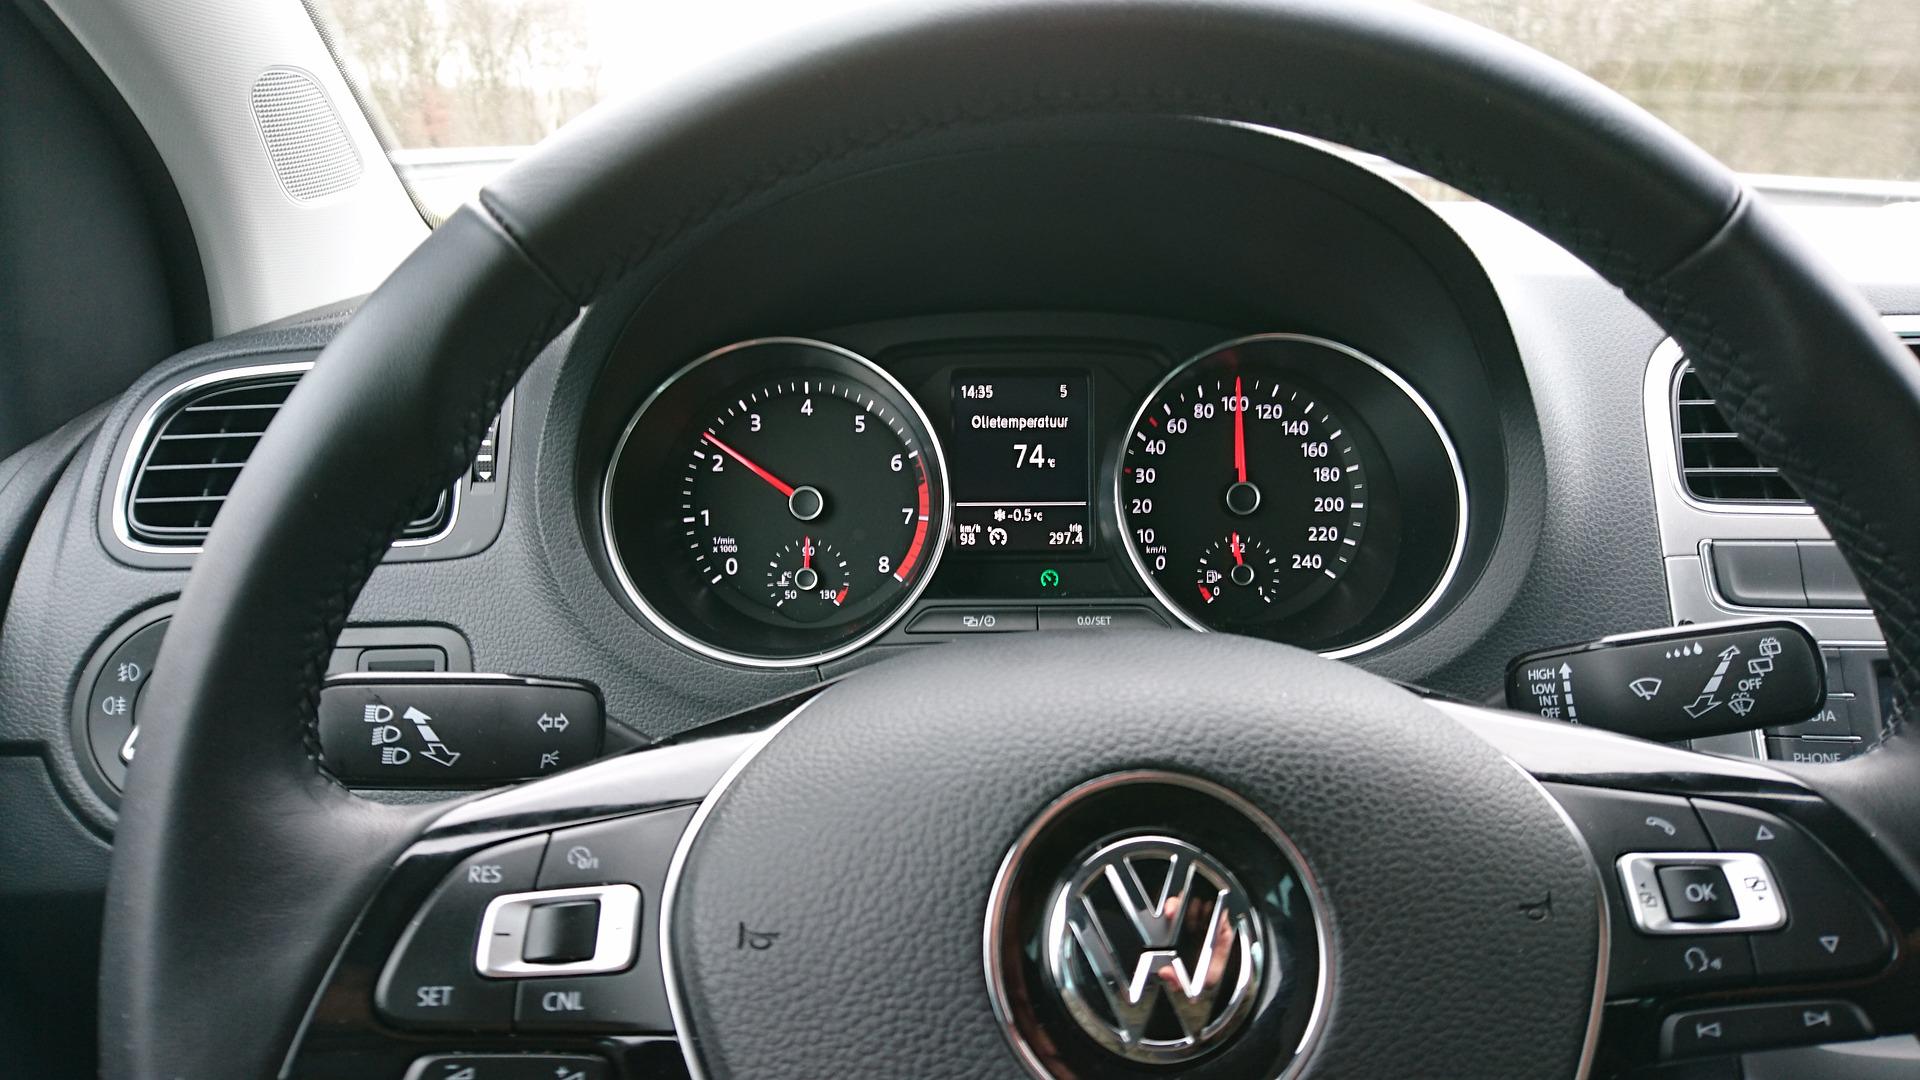 Volkswagen Polo с пробегом стал самым подорожавшим автомобилем в РФ в I квартале 2022 года